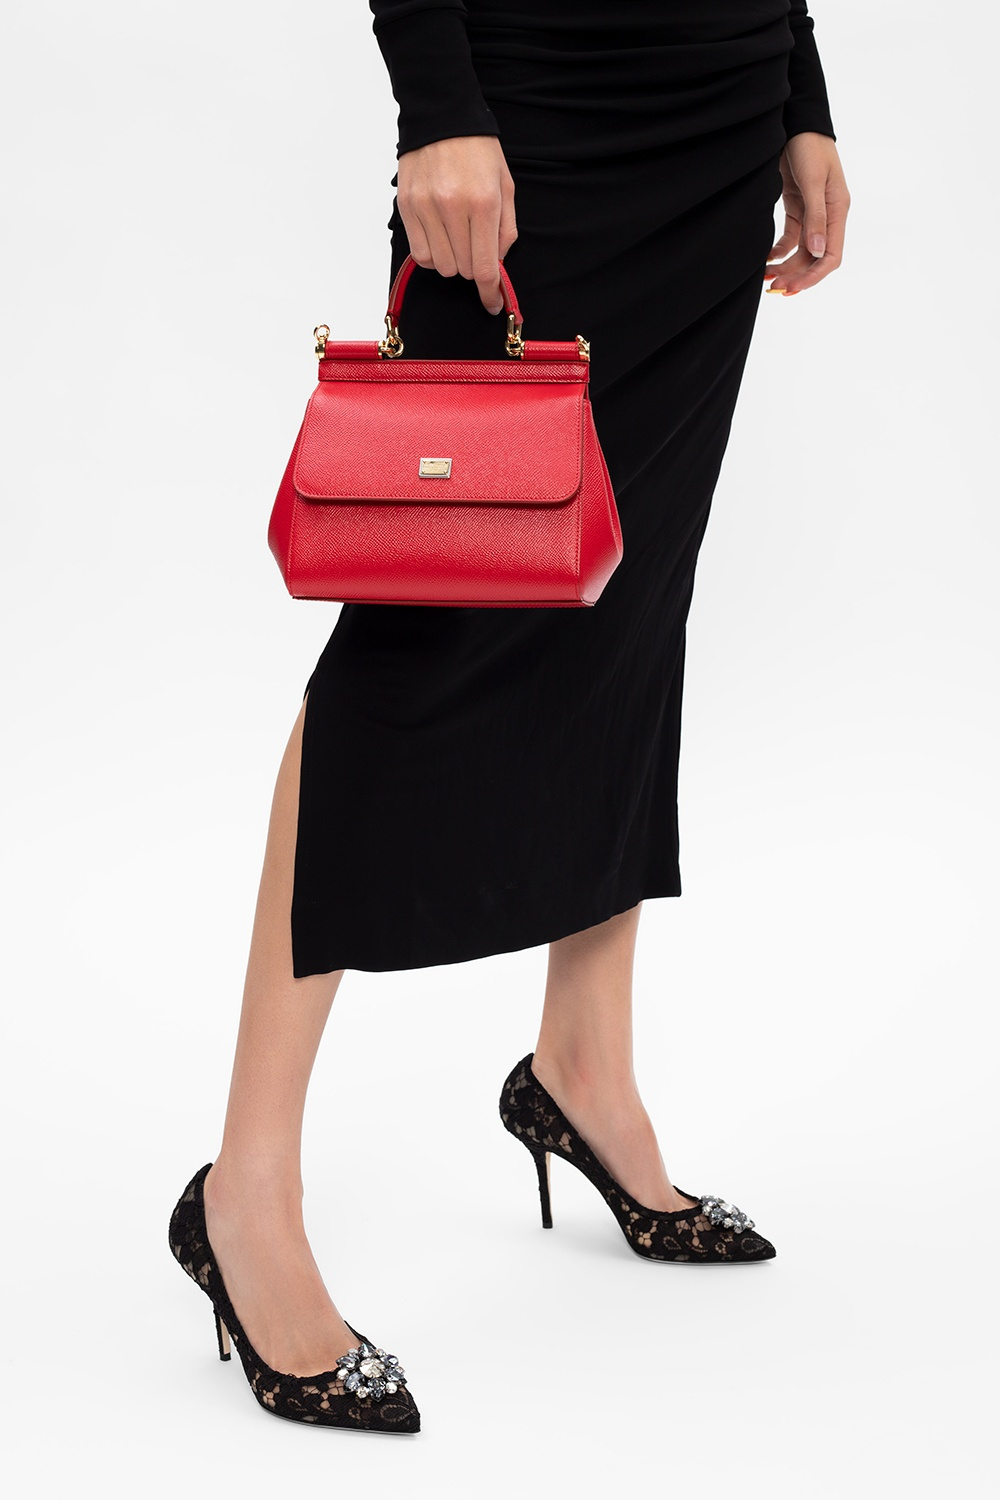 Dolce Gabbana Sicily Bag Red Print | 3D model